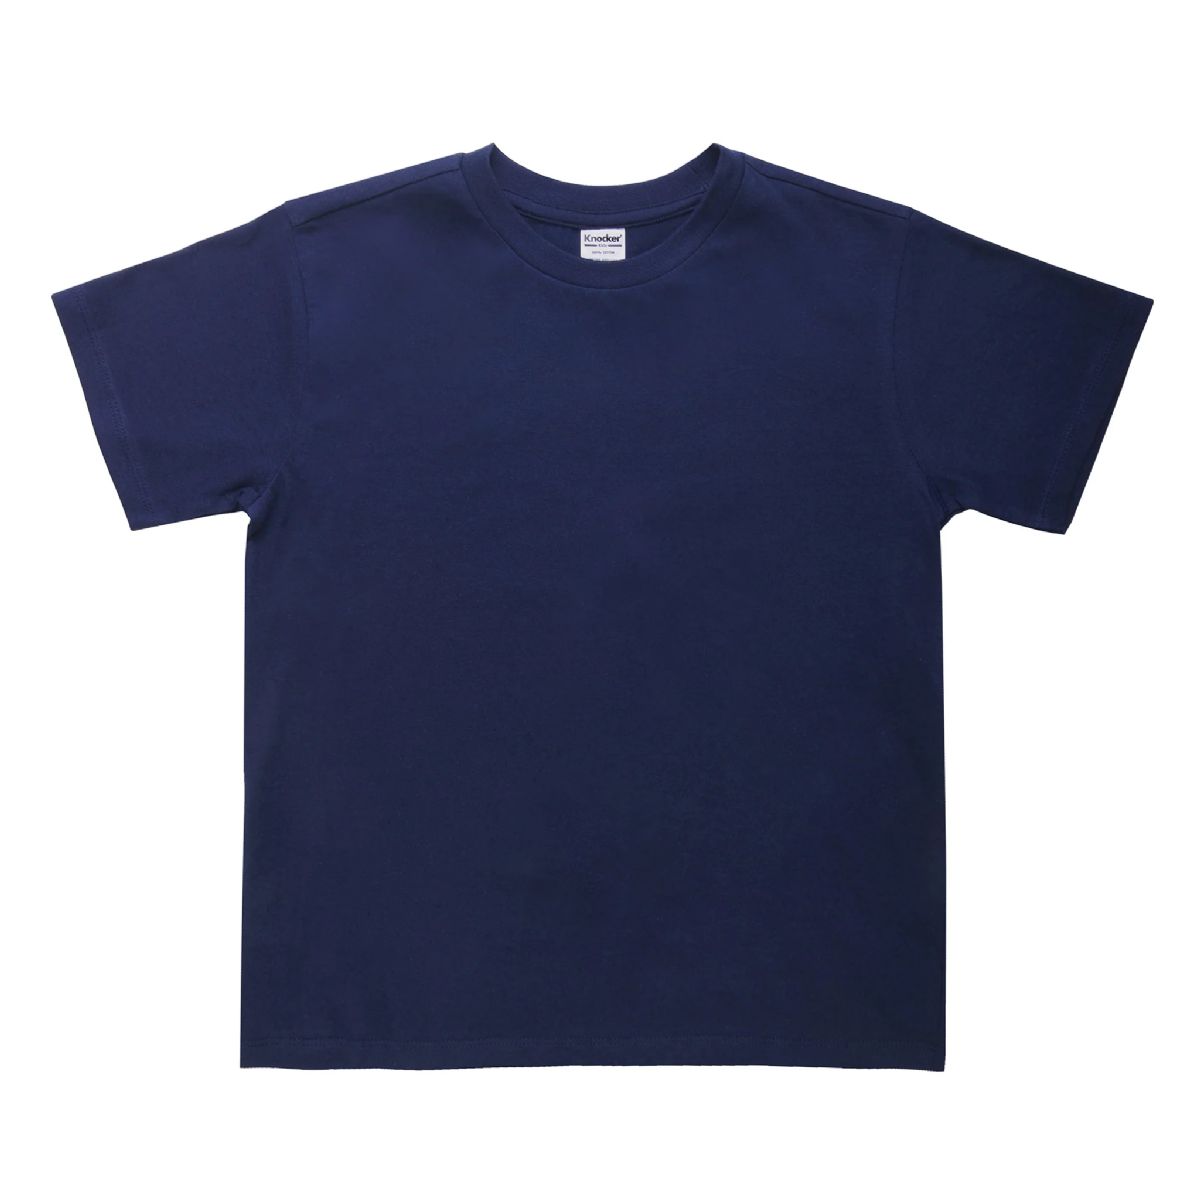 54 Pieces of Boy's Cotton Round Neck T-Shirt